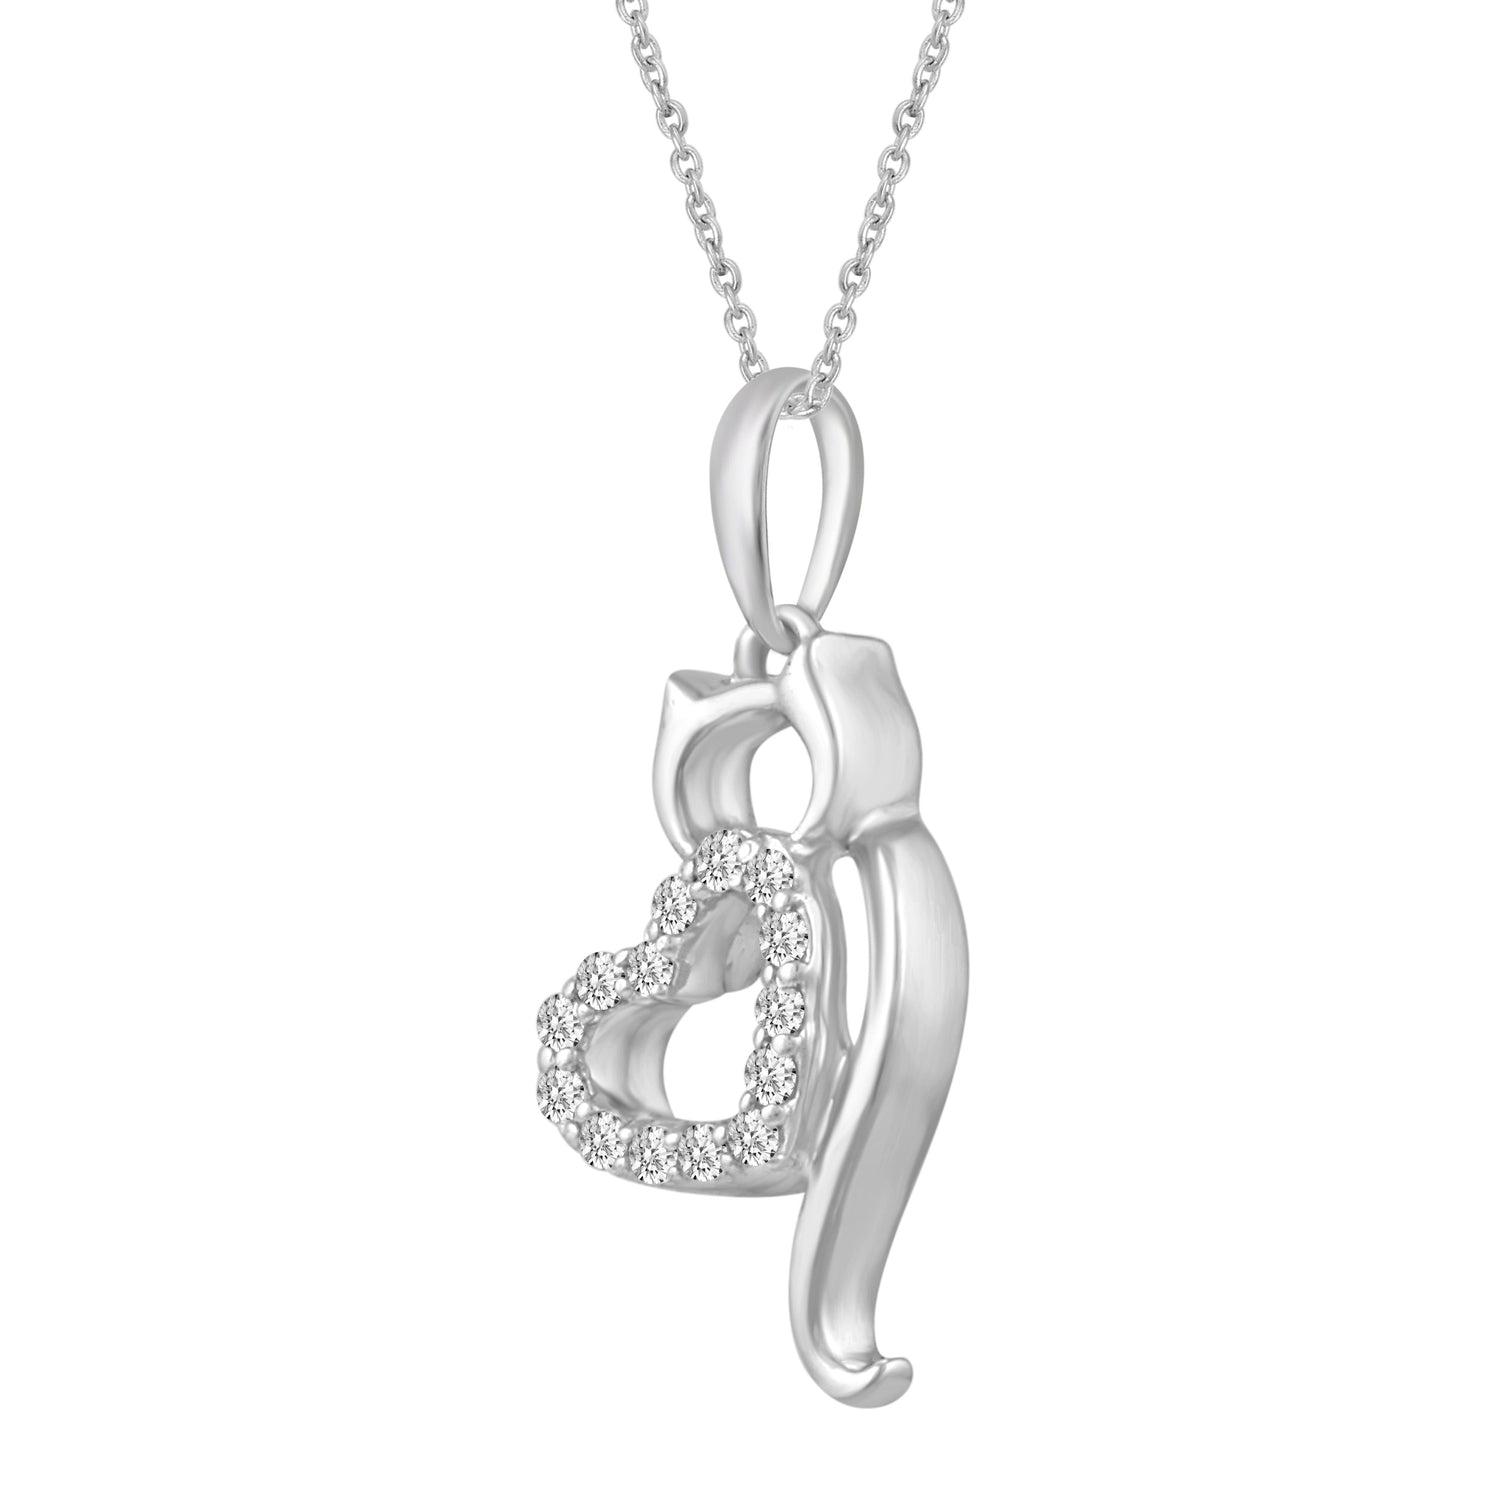 1/20 CT TW Diamond Cat Heart Pendant in Sterling Silver